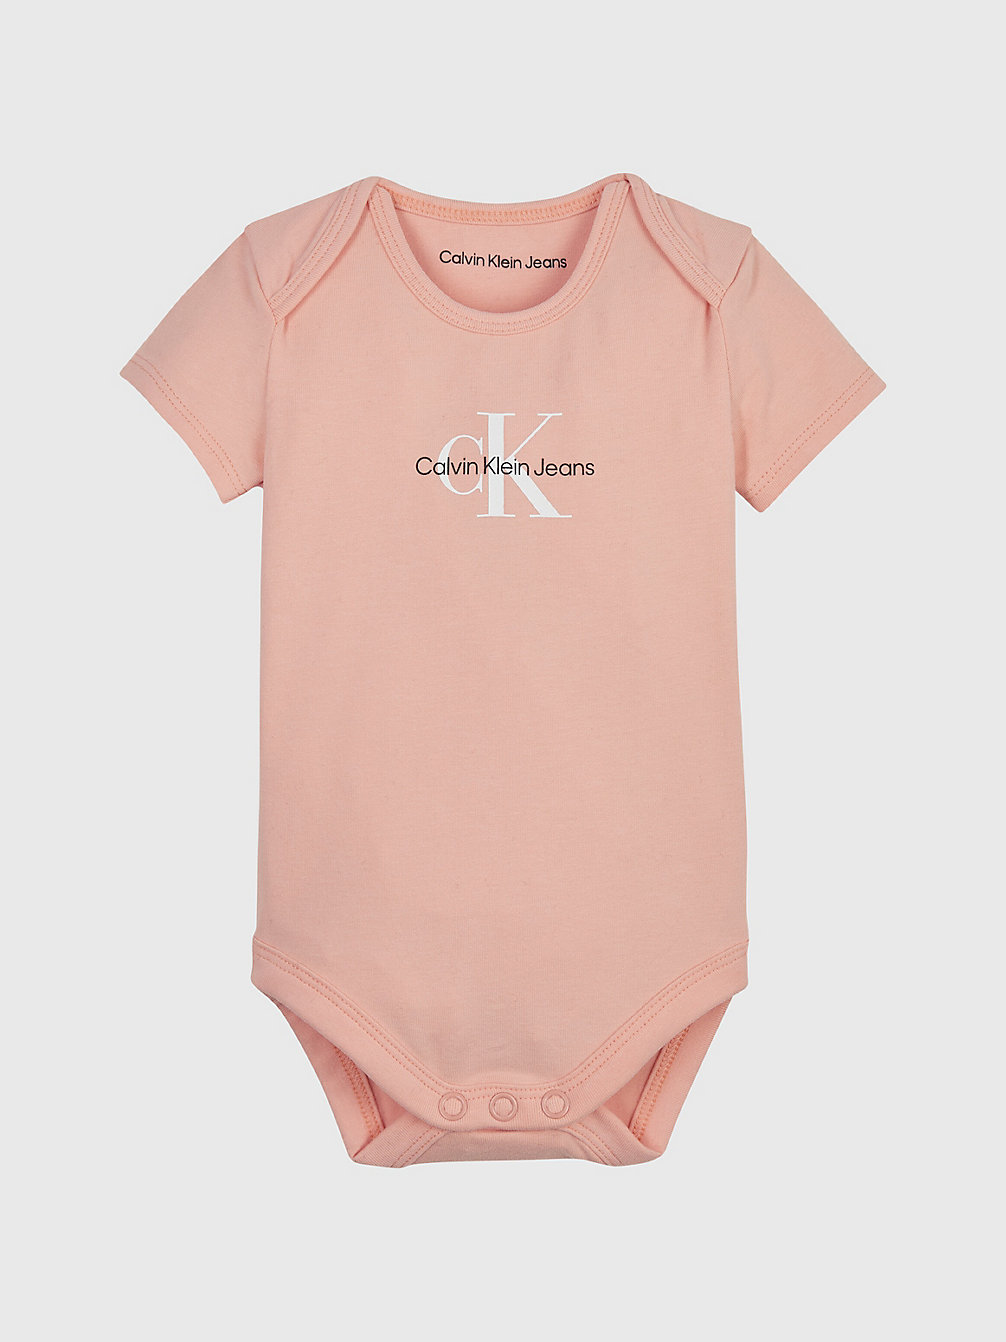 FRESH CANTALOUPE Logo-Baby-Body undefined newborn Calvin Klein